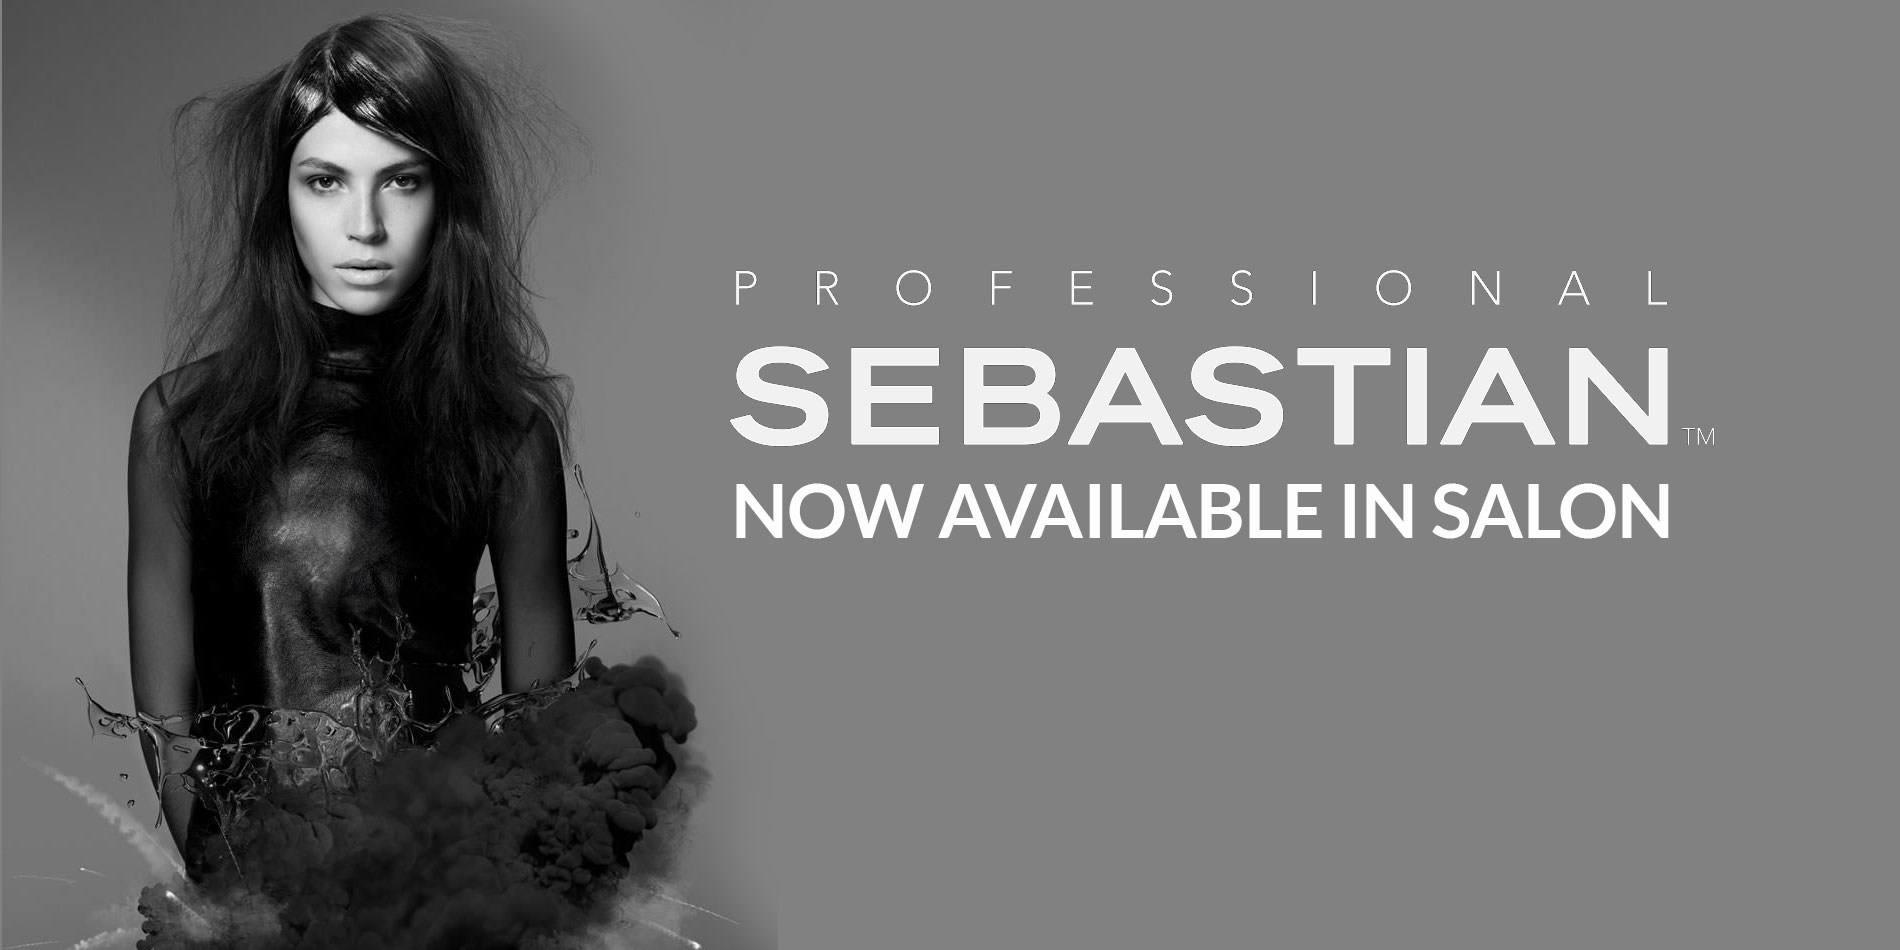 SebastianNow Available In Salon banner